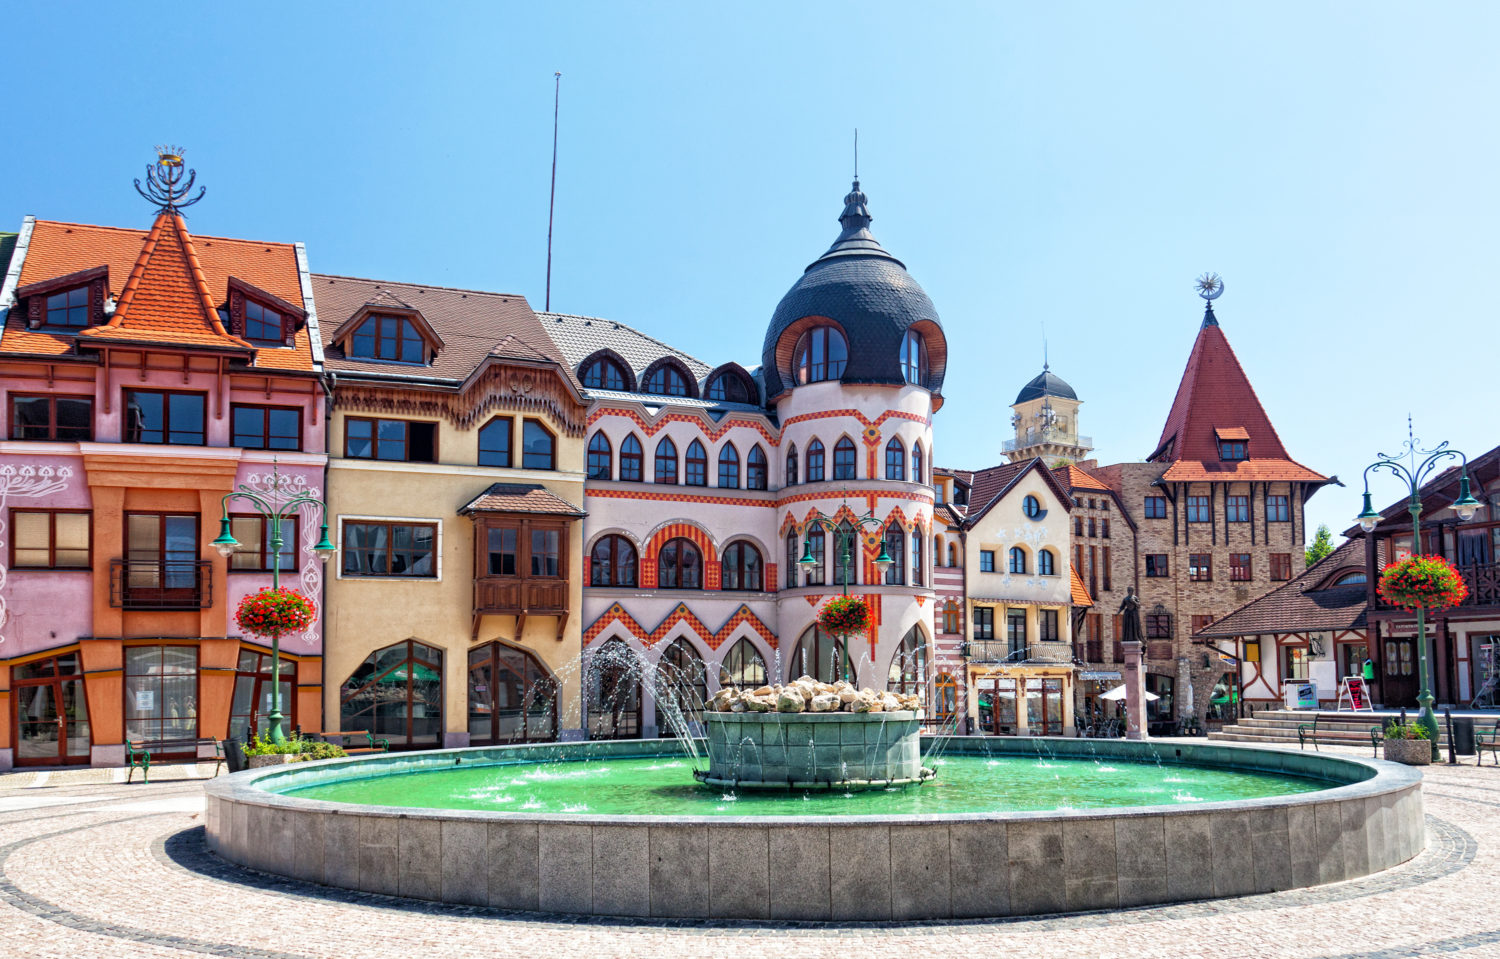 Europe square in Komarno, Slovakia